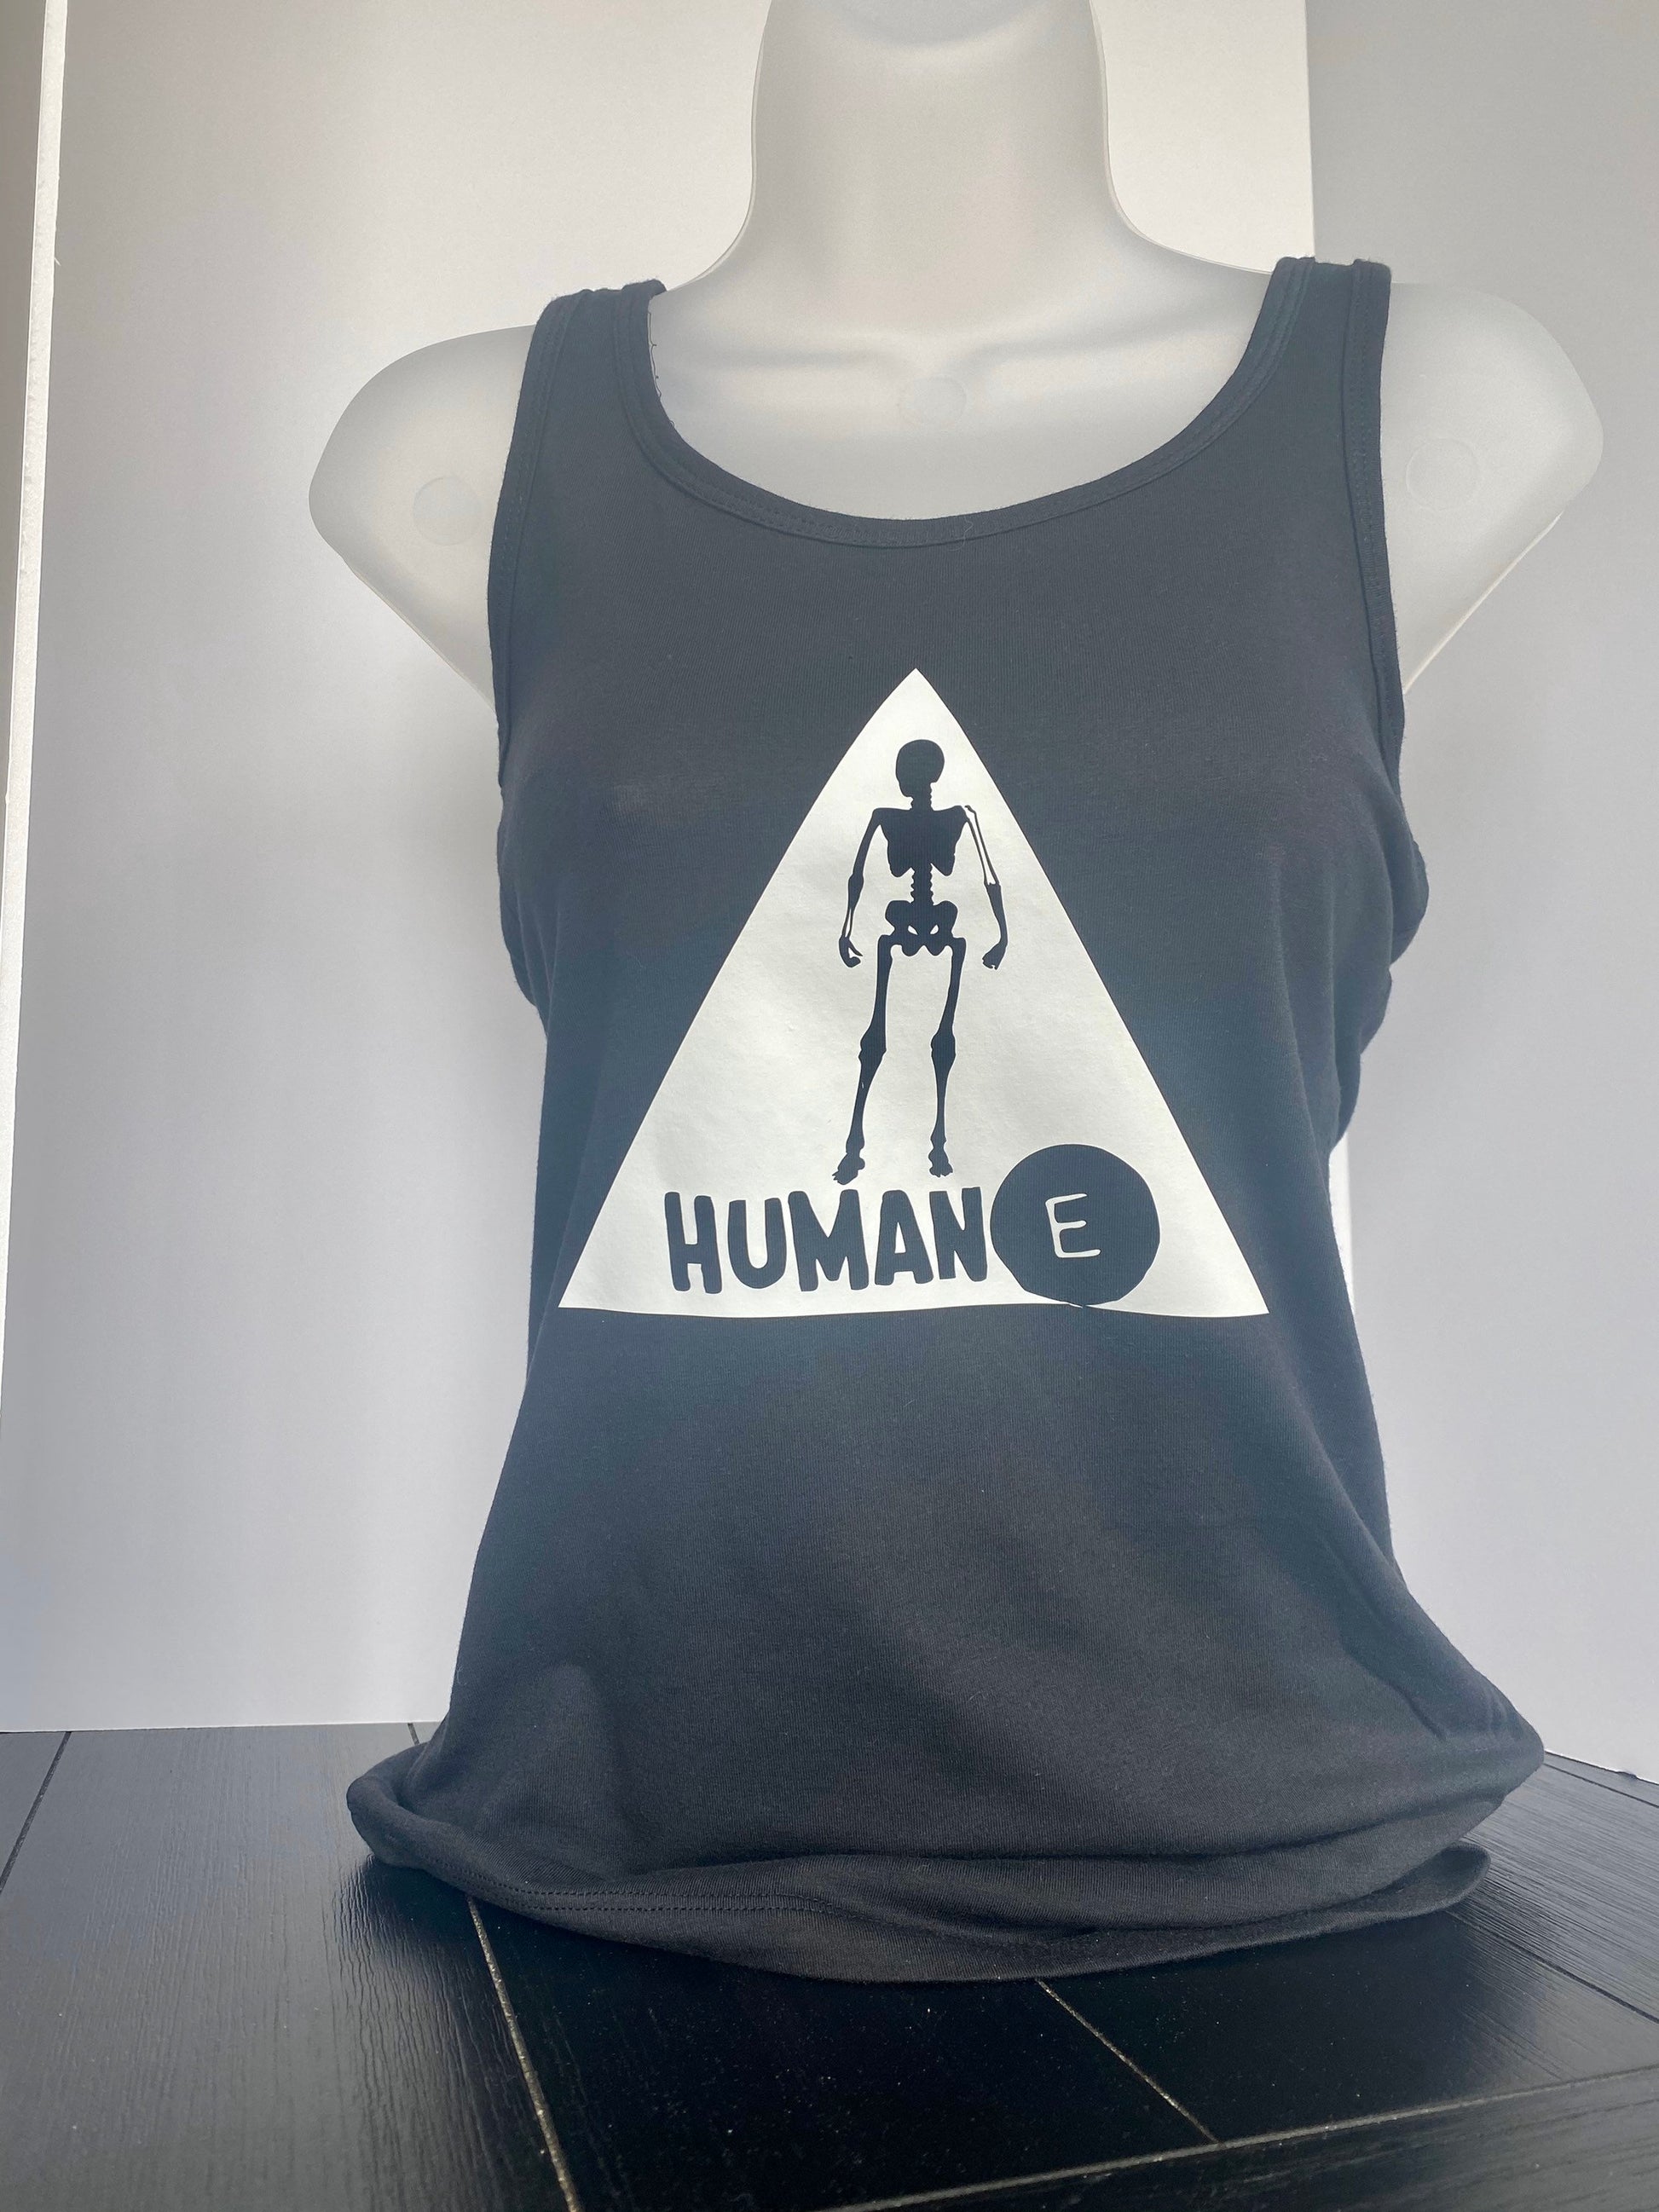 Humane Tank, T-shirt, Hoodie, or Tote